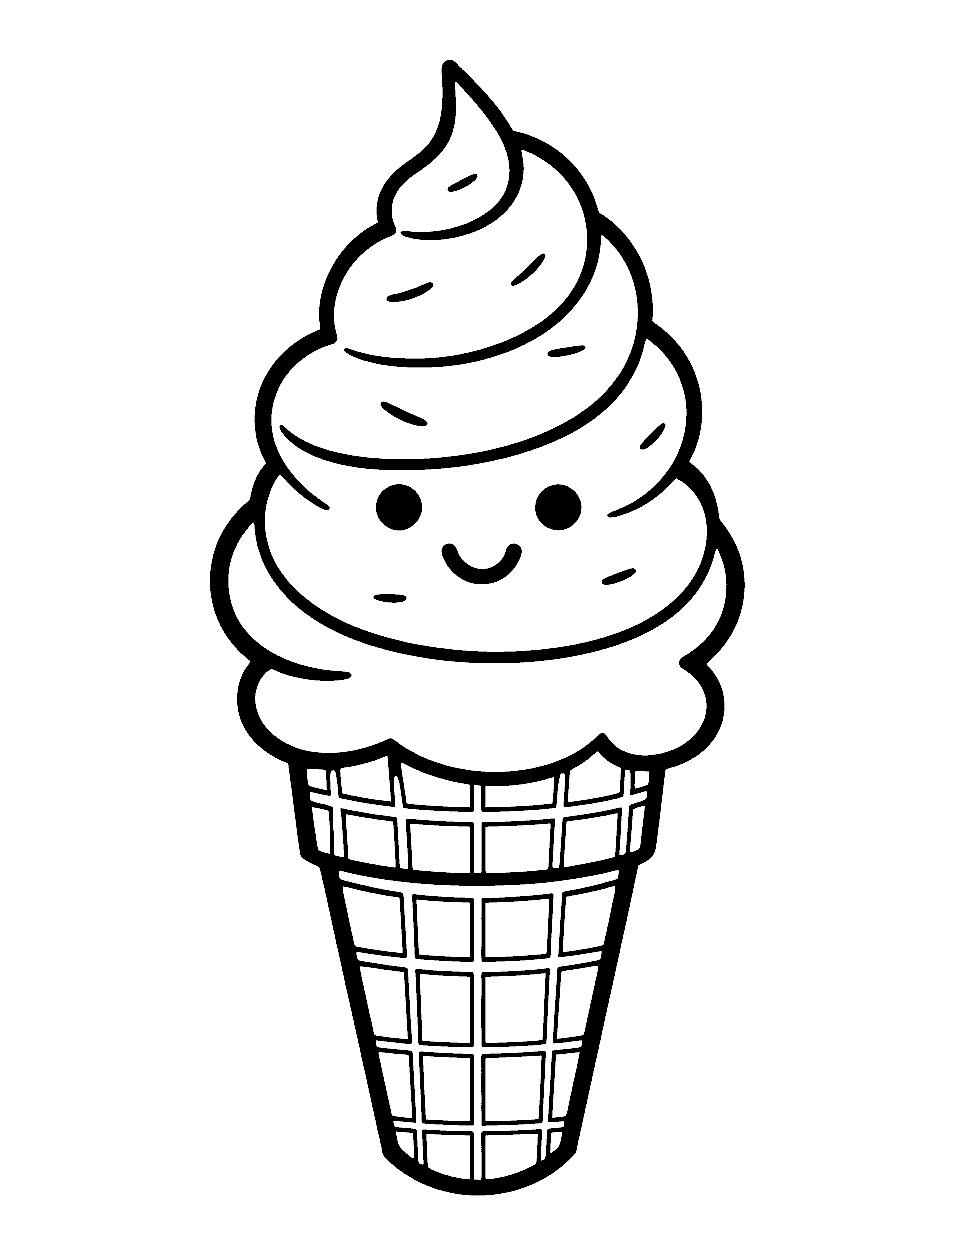 Kawaii Ice Cream Cone With a Face Cute Coloring Page - A happy ice cream cone with a cute face and a cherry on top.